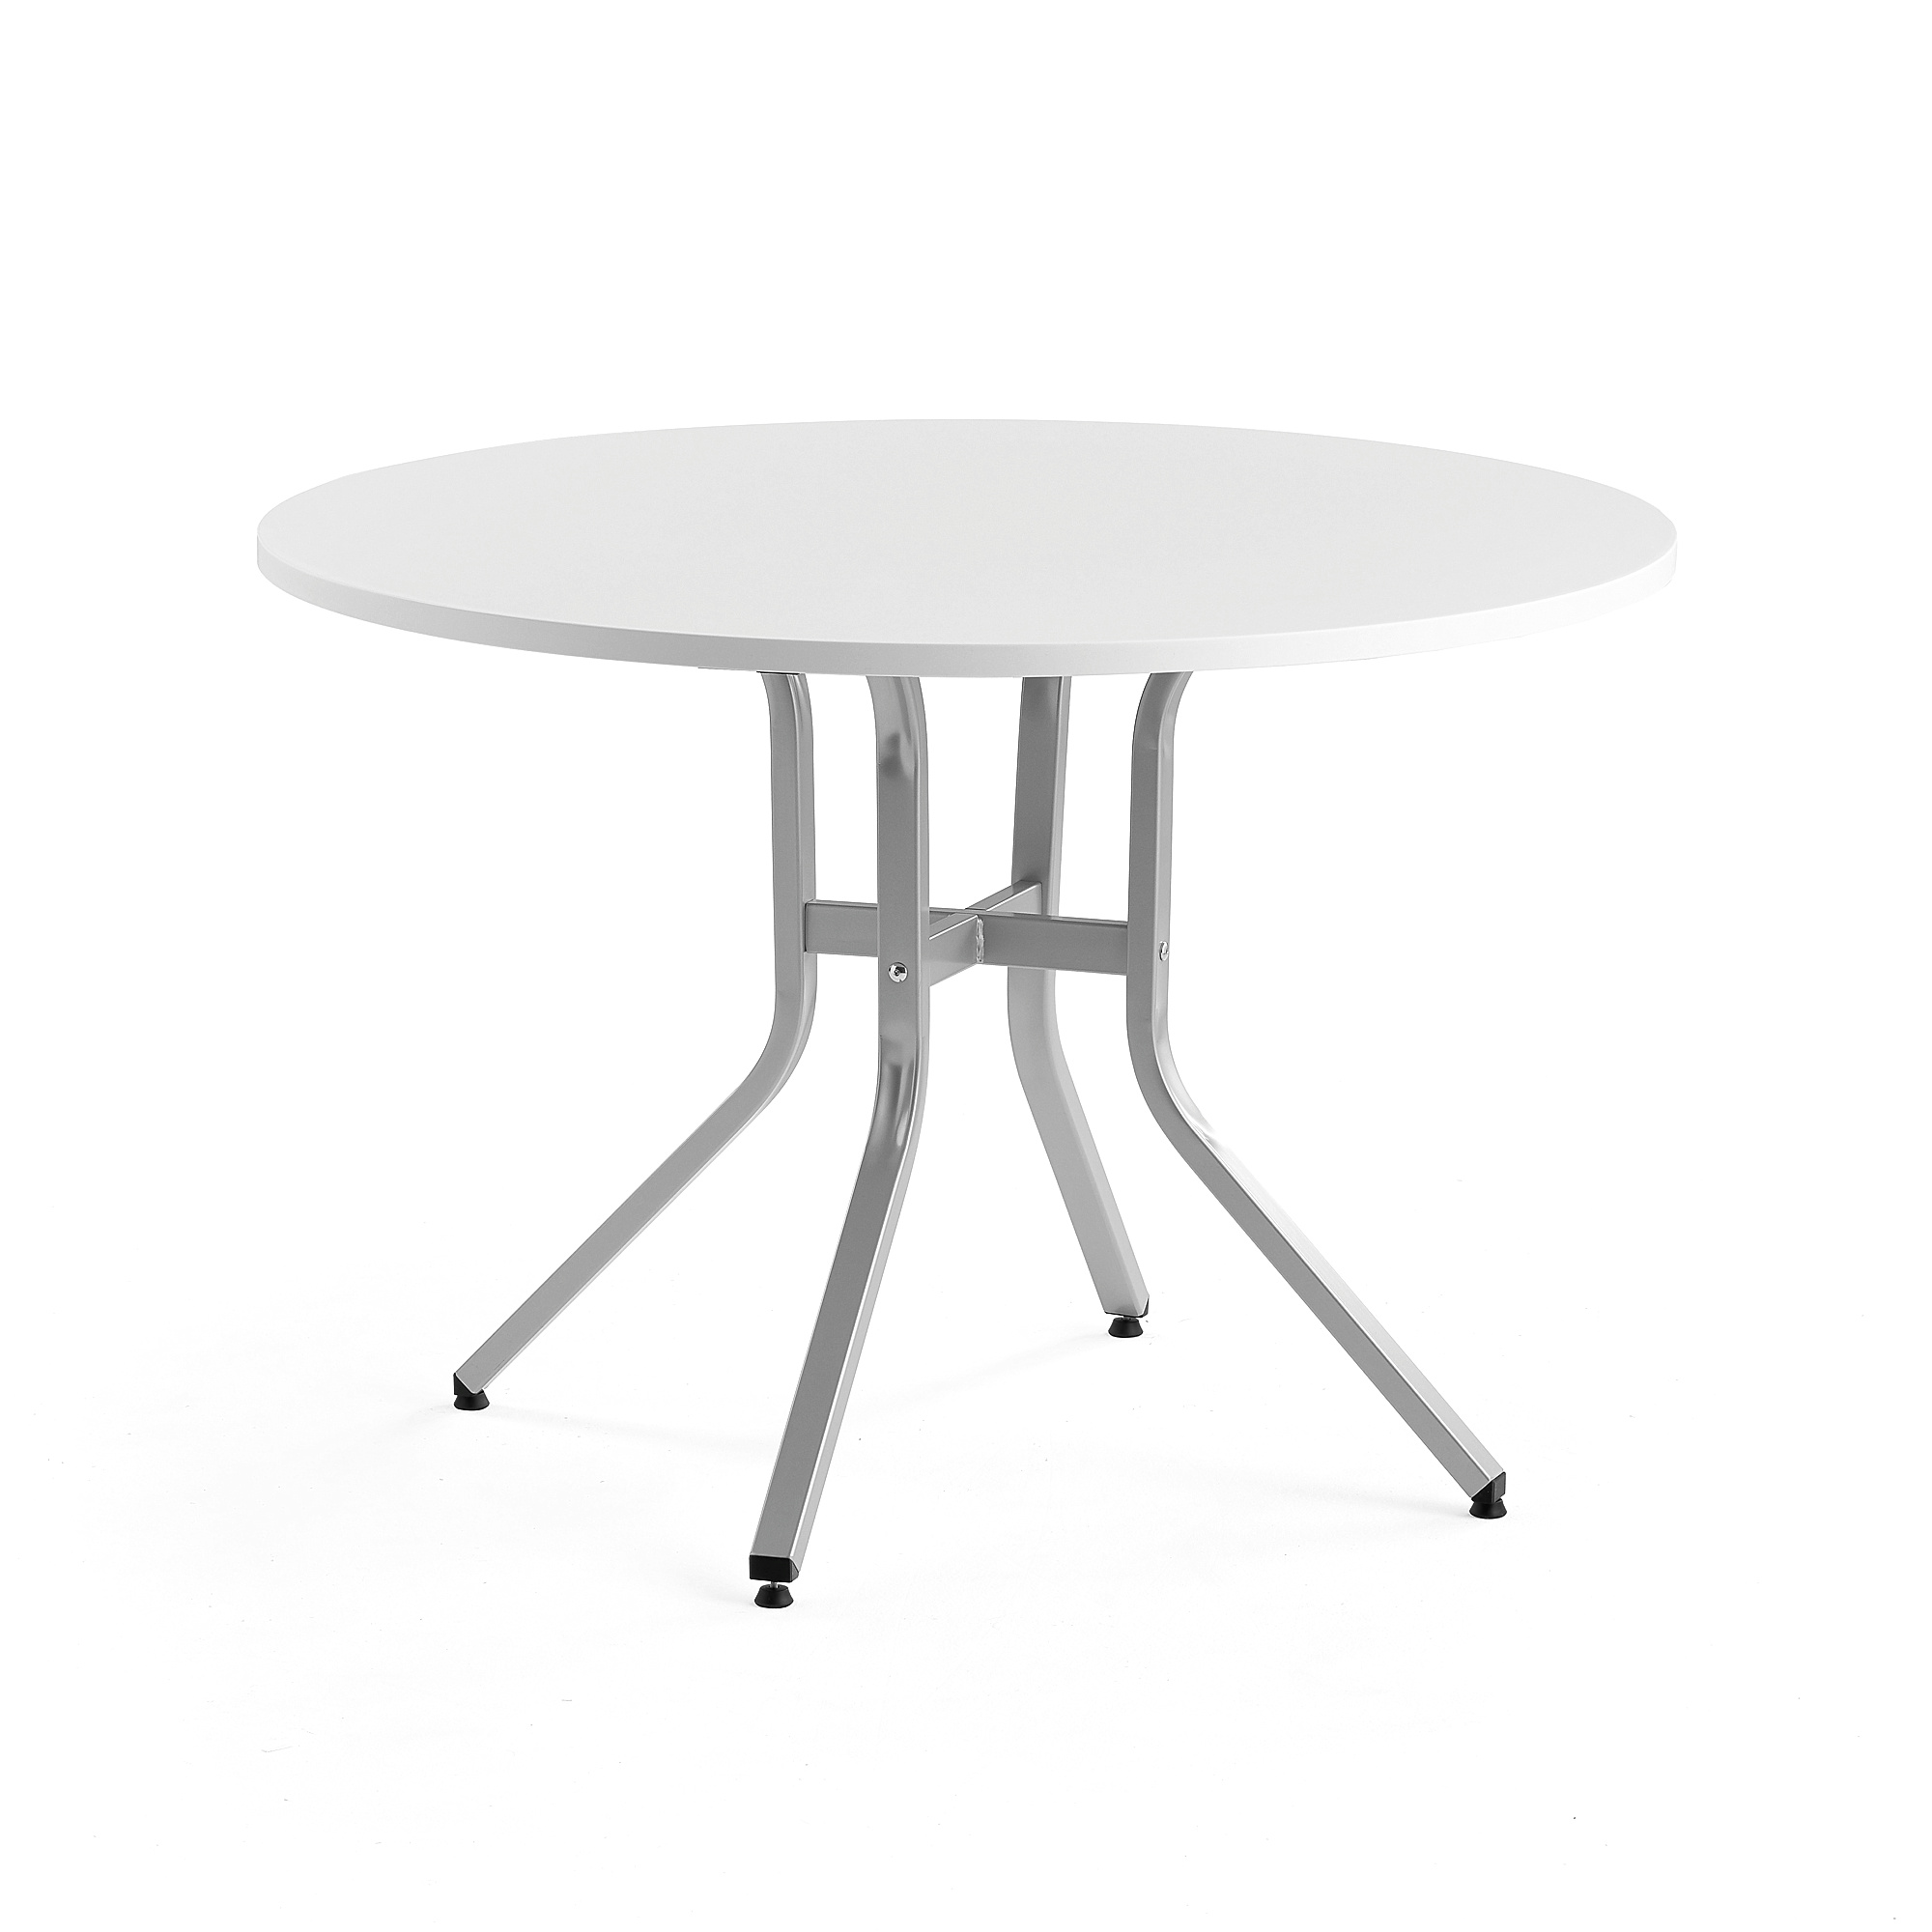 Stôl VARIOUS, Ø1100x740 mm, strieborná, biela